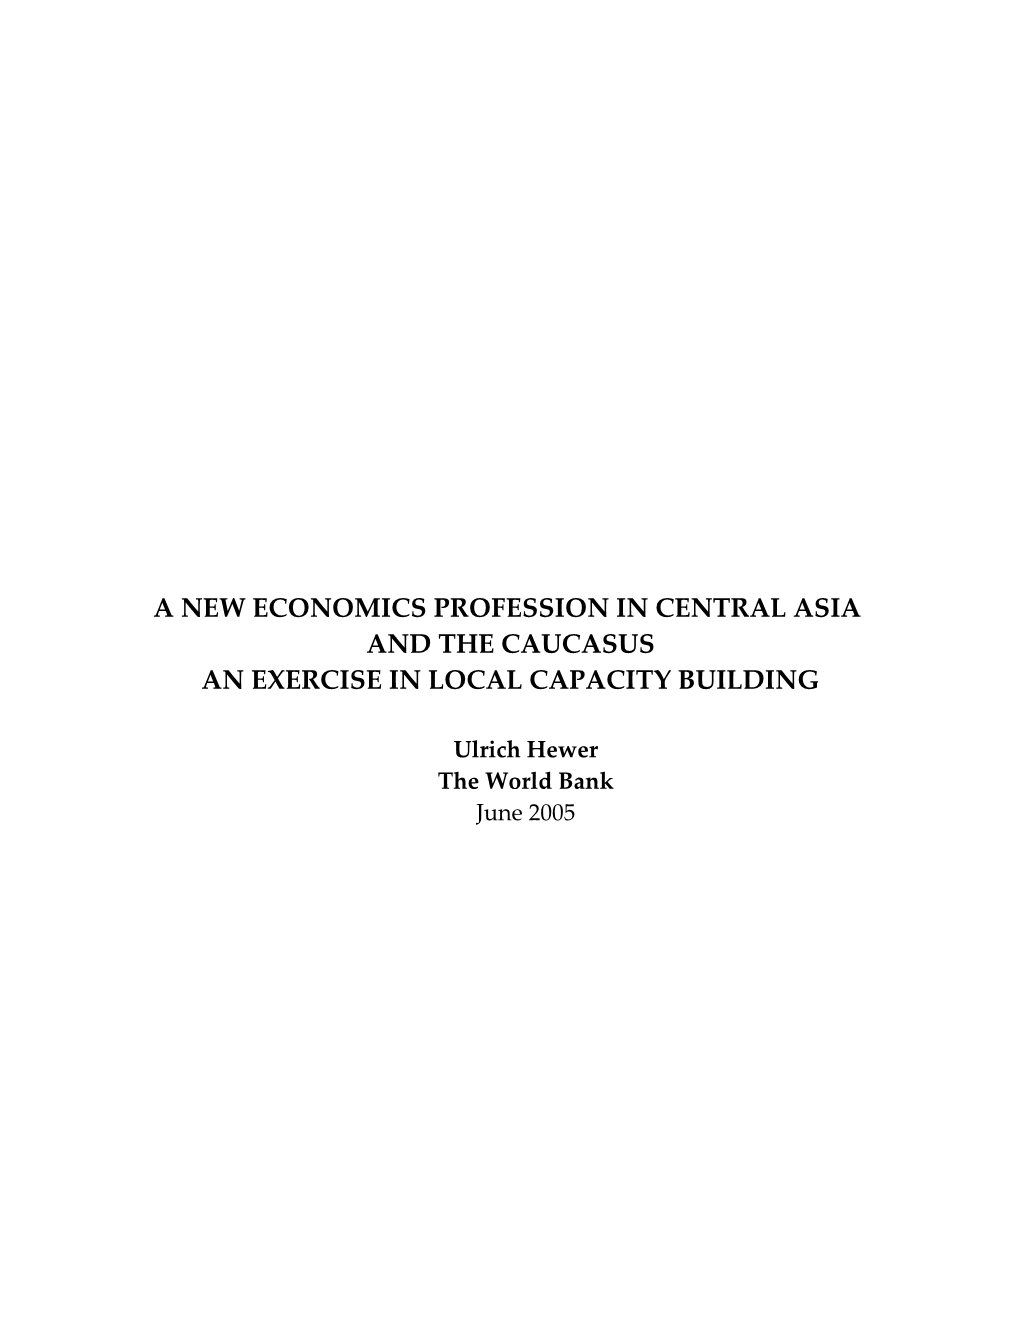 New Economics Profession in Central Asia and the Caucasus